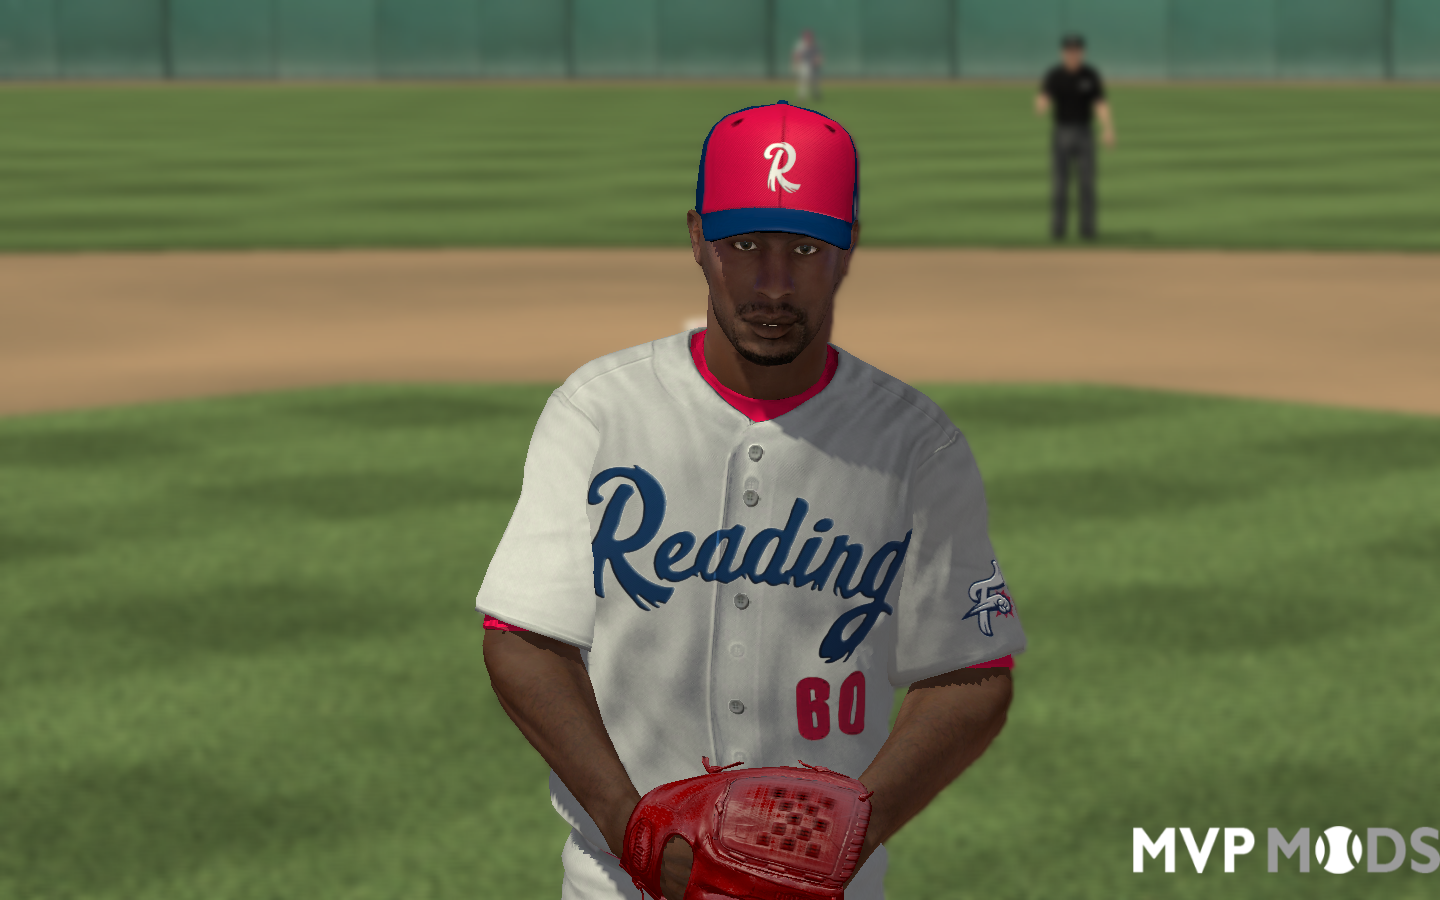 2021 Philadelphia Phillies uniforms - Uniforms - MVP Mods